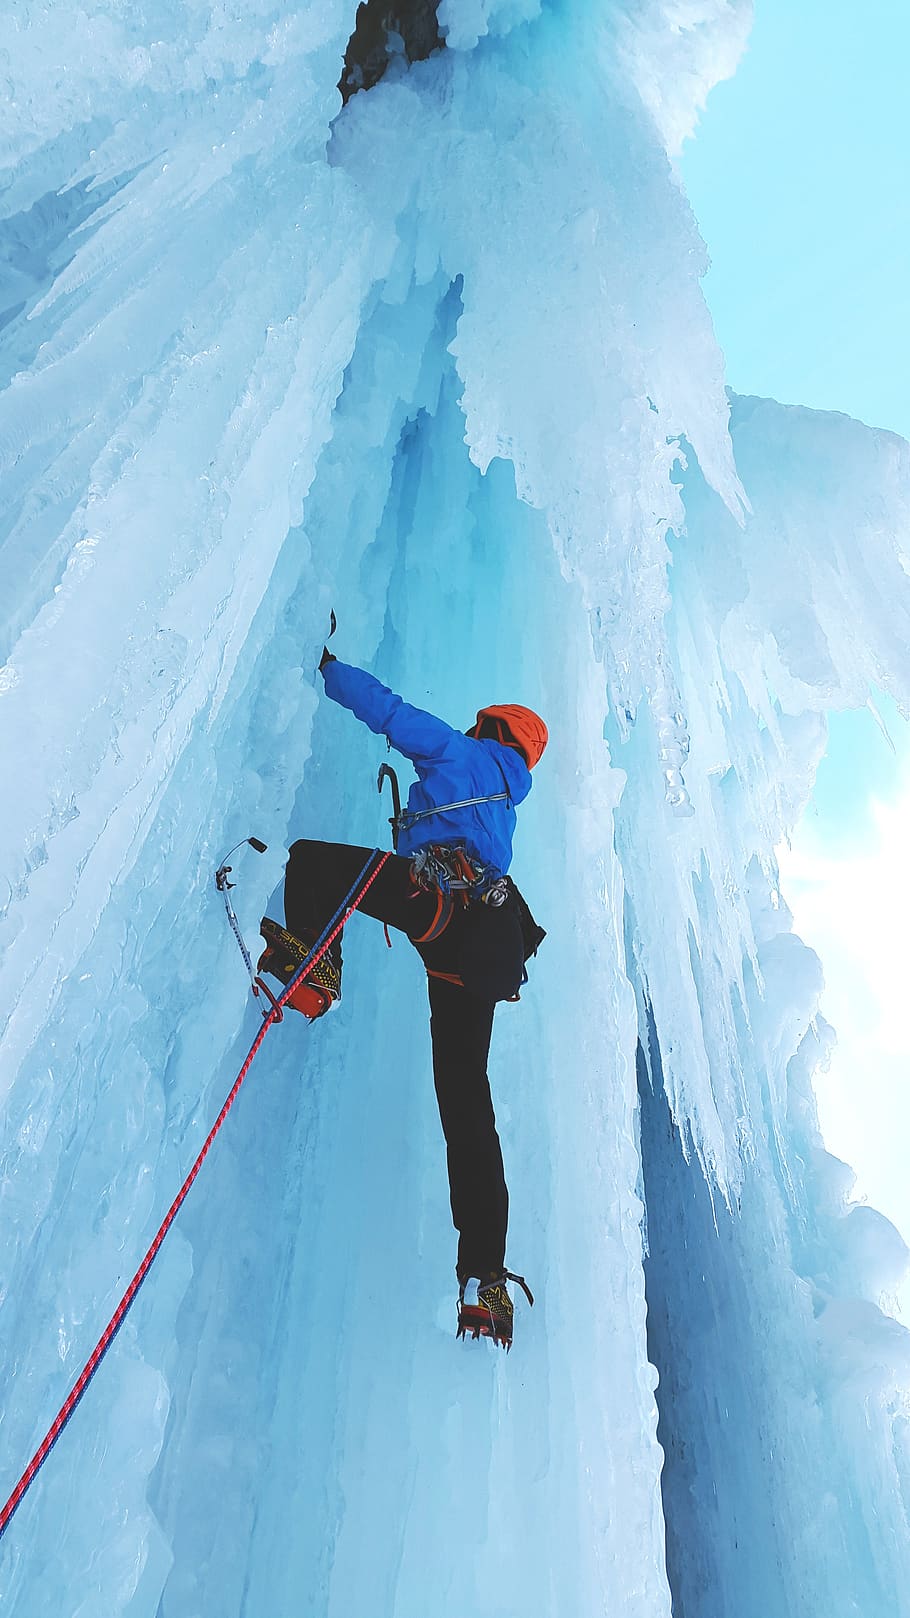 escalada no gelo, esportes radicais, escalar, gelo, queda de gelo, alpinistas, alpinismo, congelado, inverno, frio